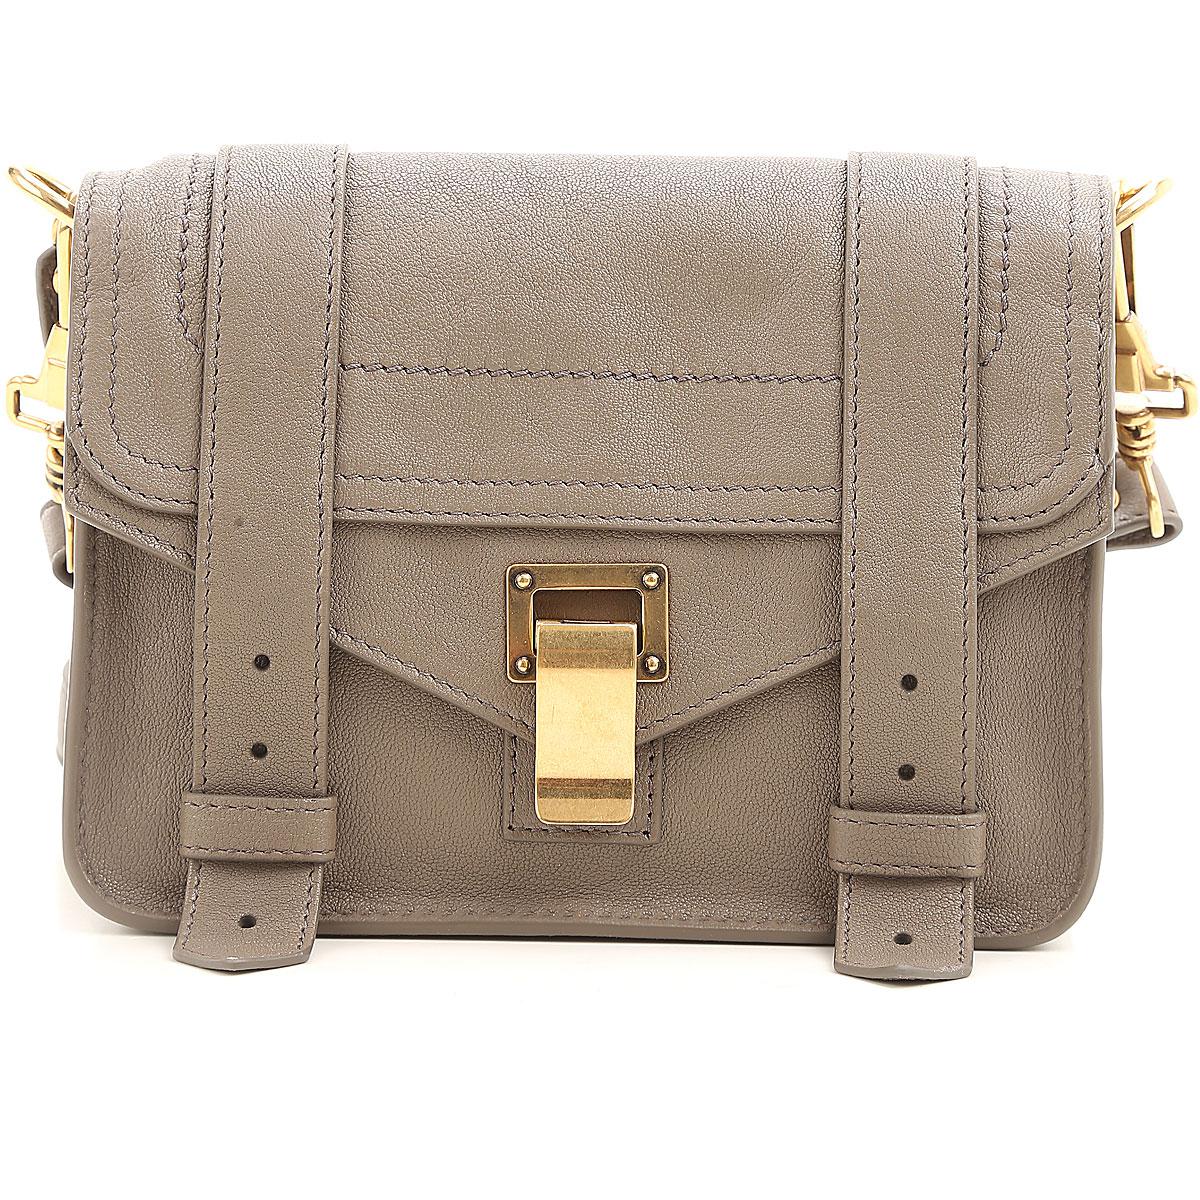 Proenza Schouler Leather Shoulder Bag For Women On Sale In Outlet ...